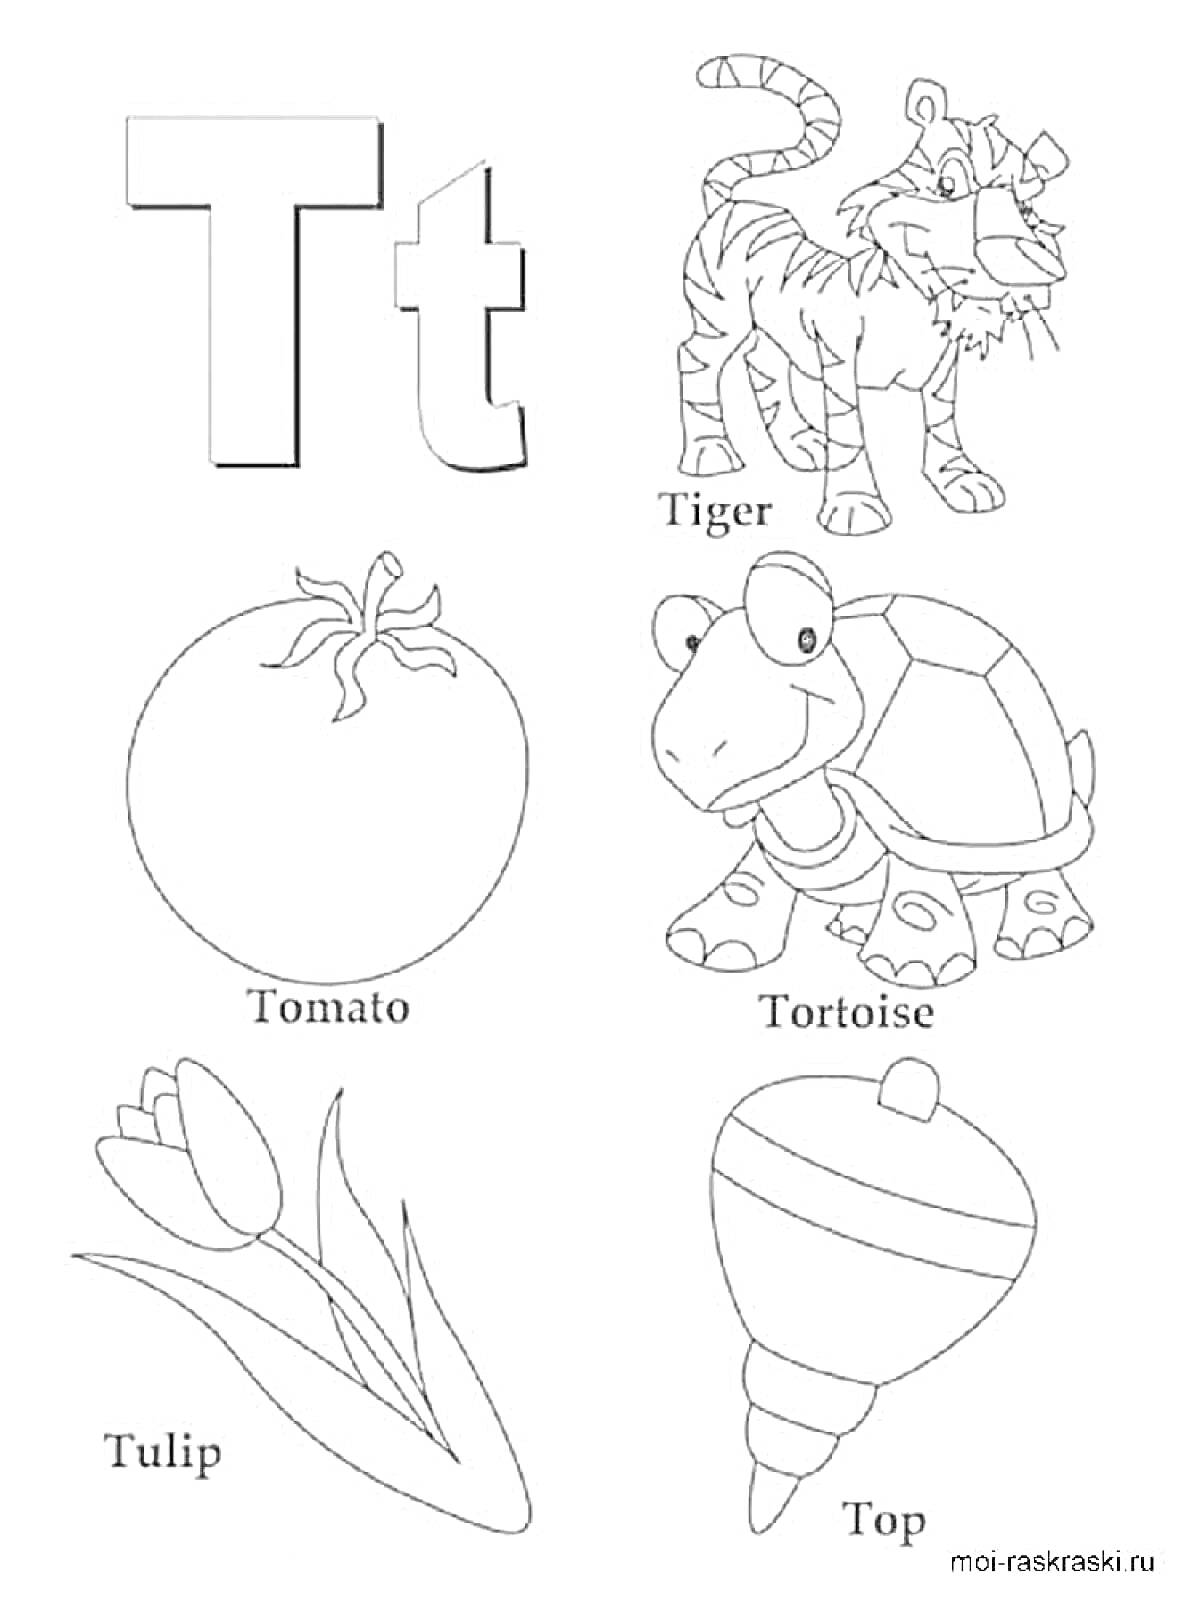 Раскраска Английский алфавит - буква T: тигр, помидор, черепаха, тюльпан, волчок